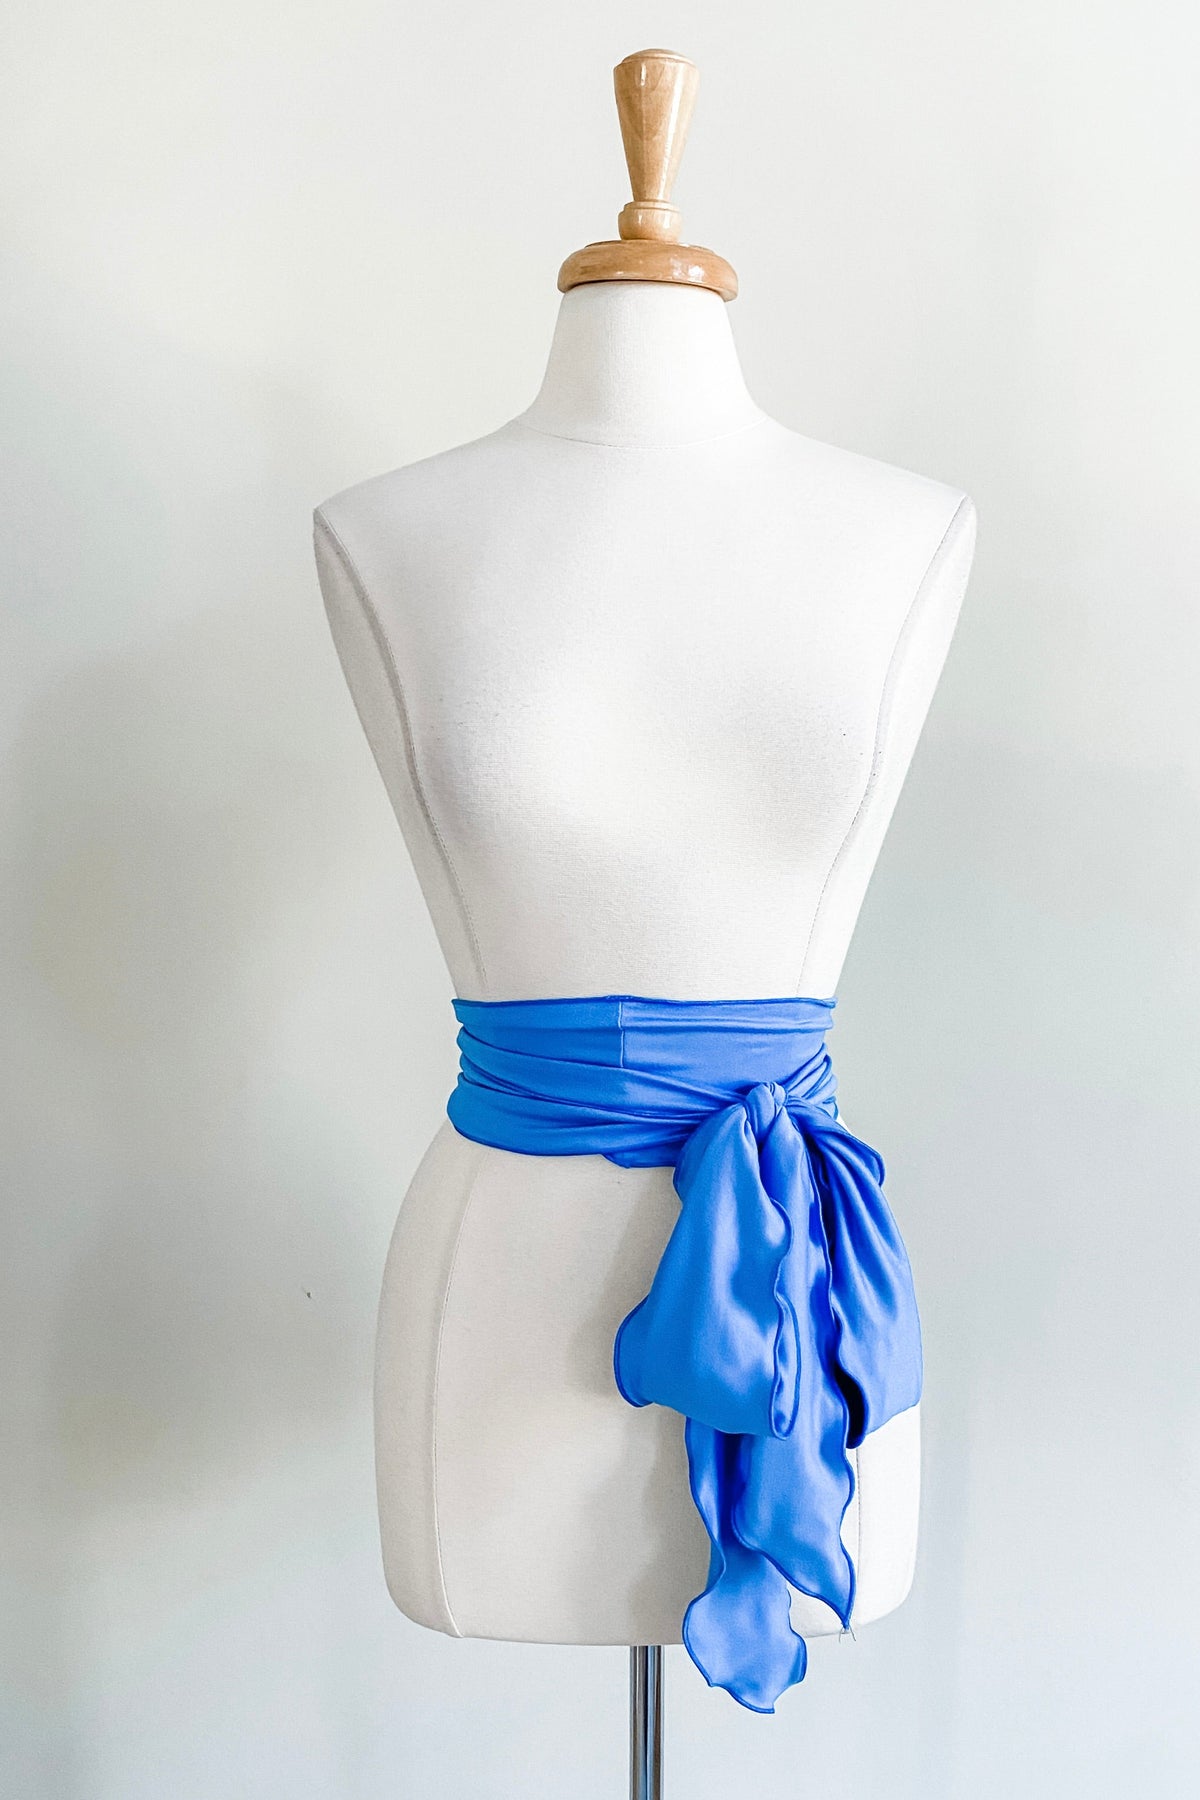 Diane Kroe Sash Belt (Sky Blue) - The Classic Capsule Collection